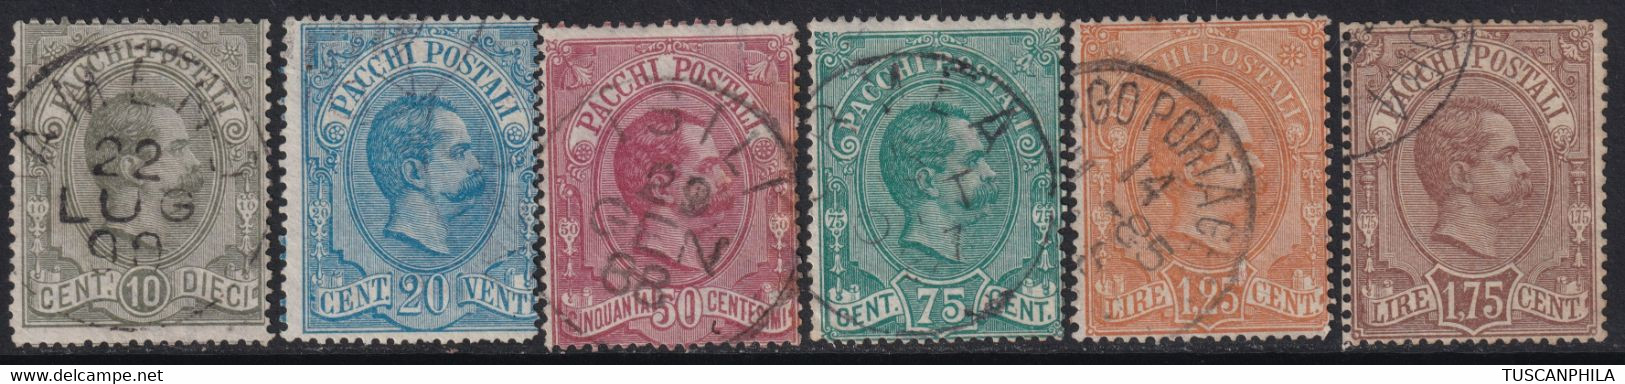 1884/86 - Umberto Pacchi Postali Serie Completa Usata F.Ray, Colla - Sassone S.2100 - Colis-postaux